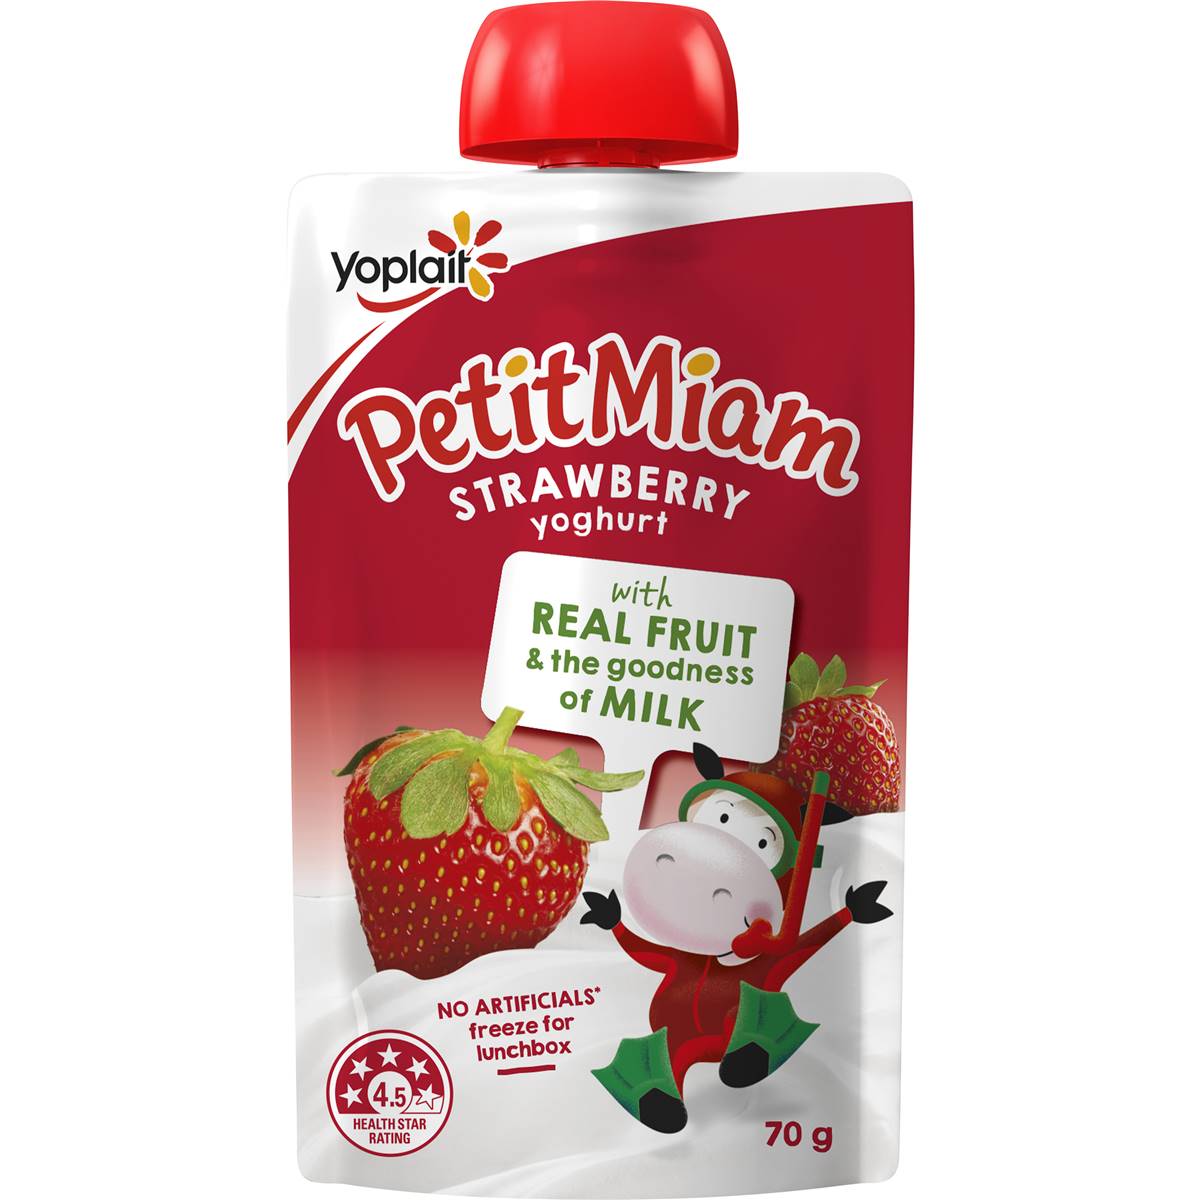 Calories in Yoplait Petit Miam Strawberry